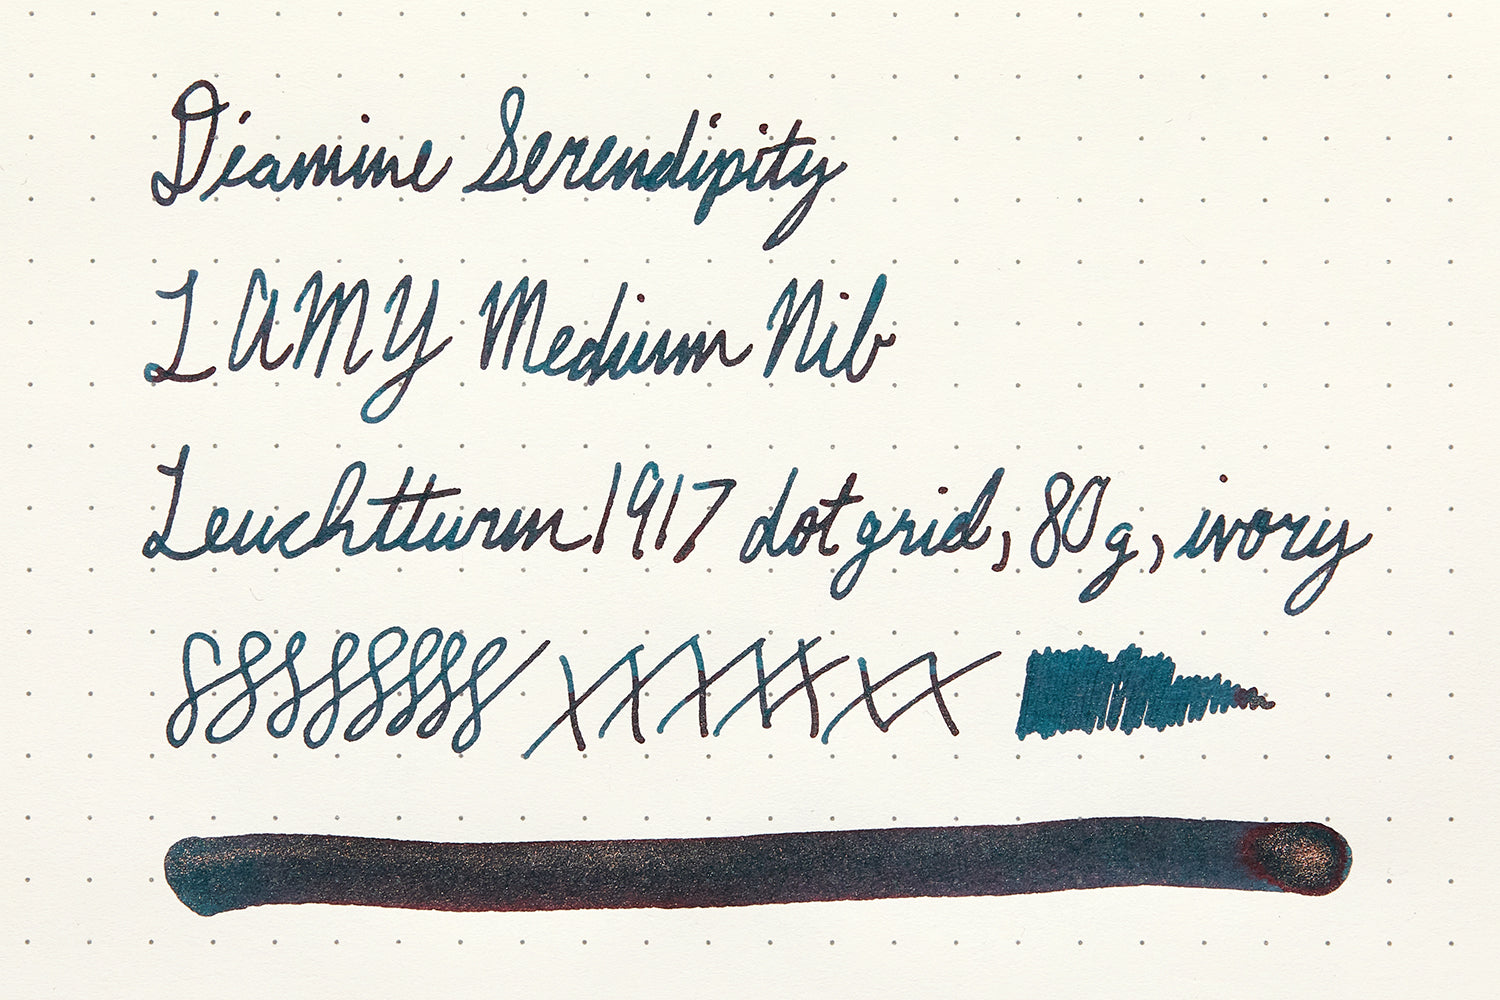 Diamine Serendipity writing test on Leuchtturm1917 paper